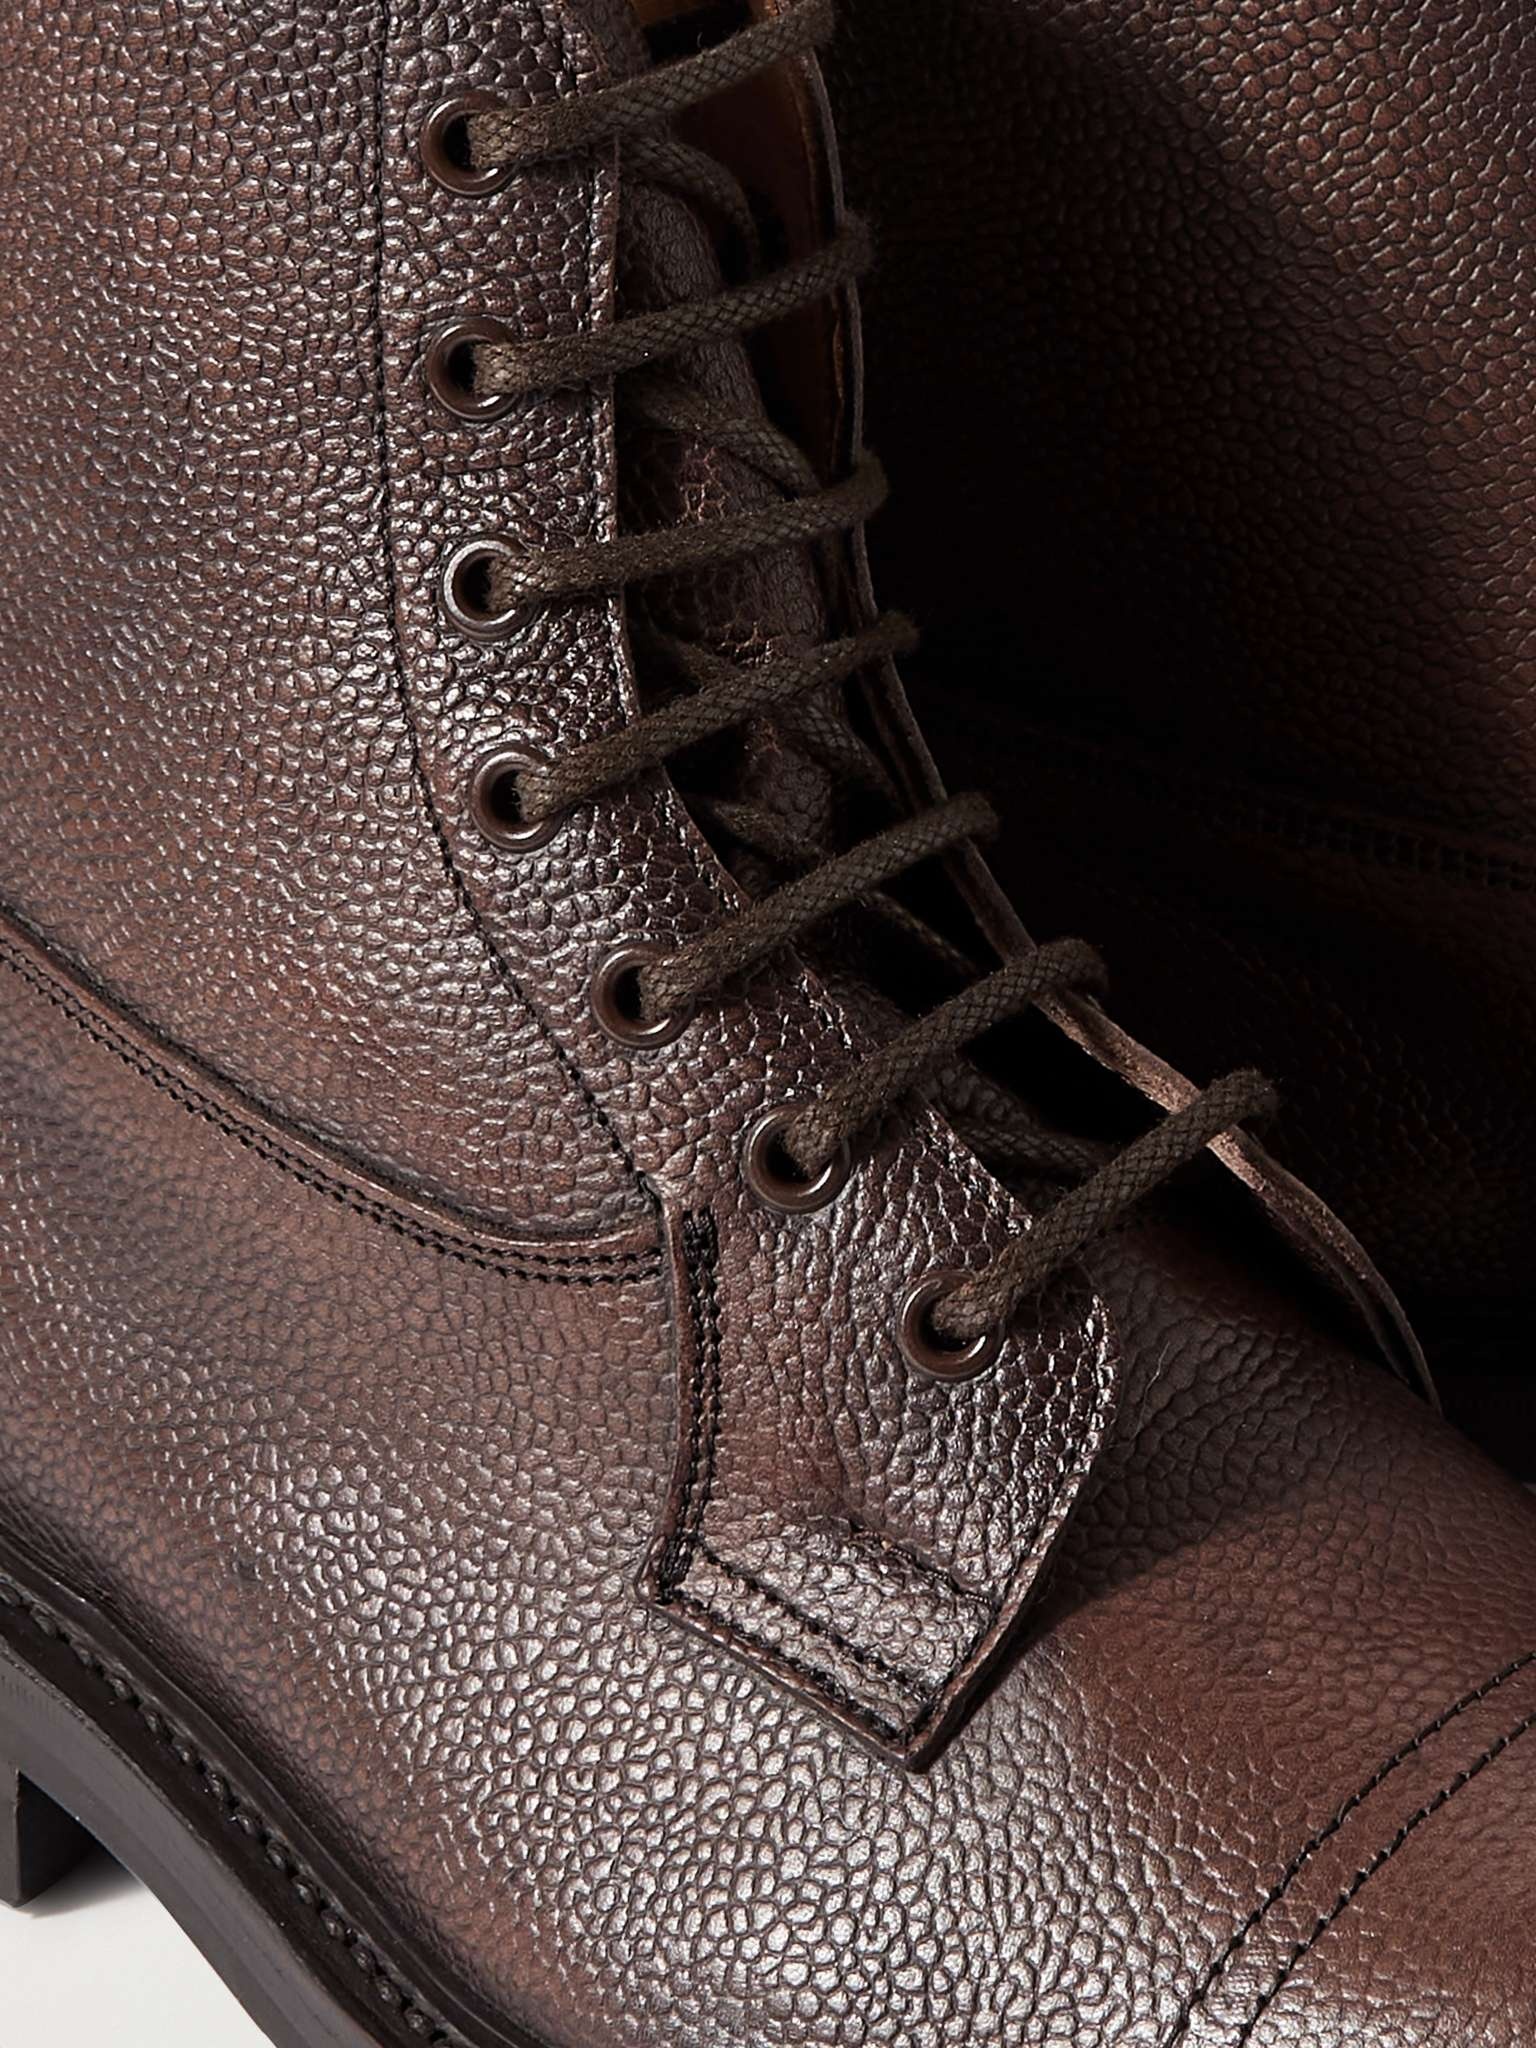 Grassmere Scotchgrain Leather Boots - 5